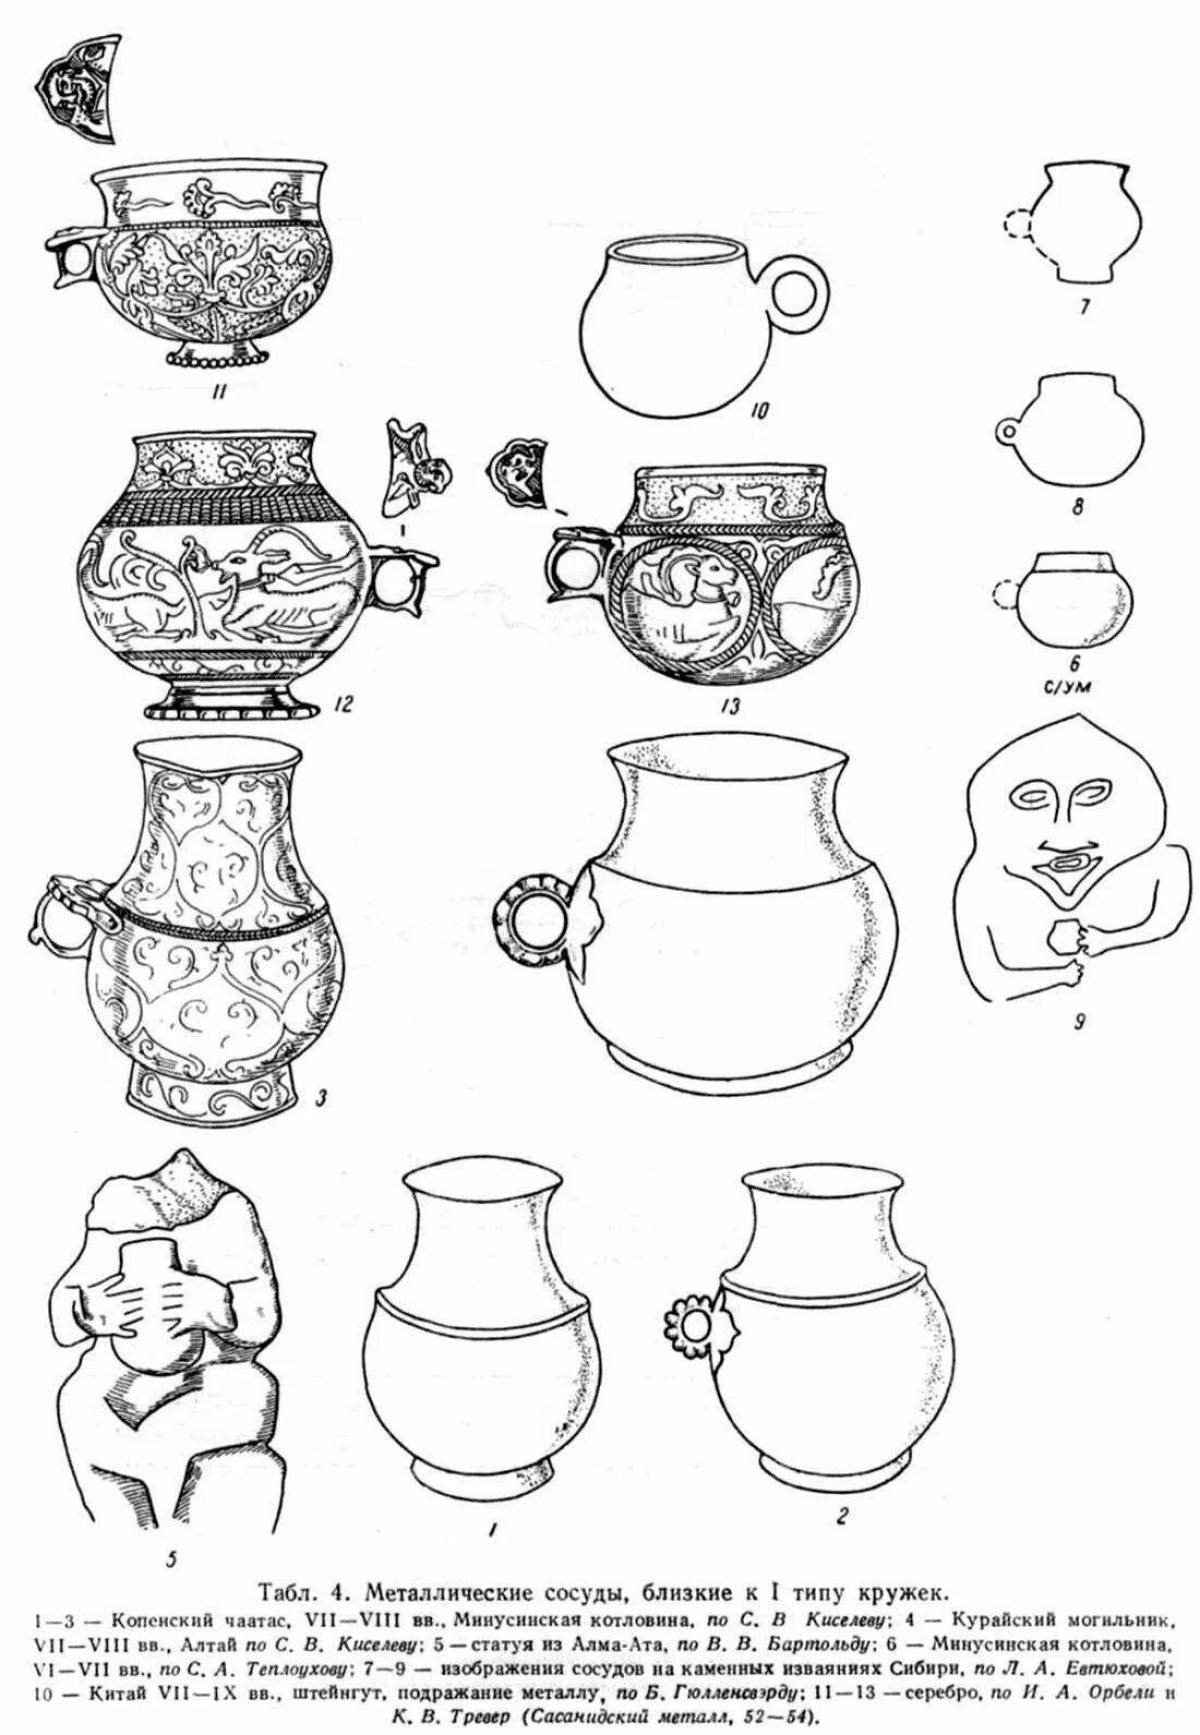 Charming Skopino ceramics grade 3